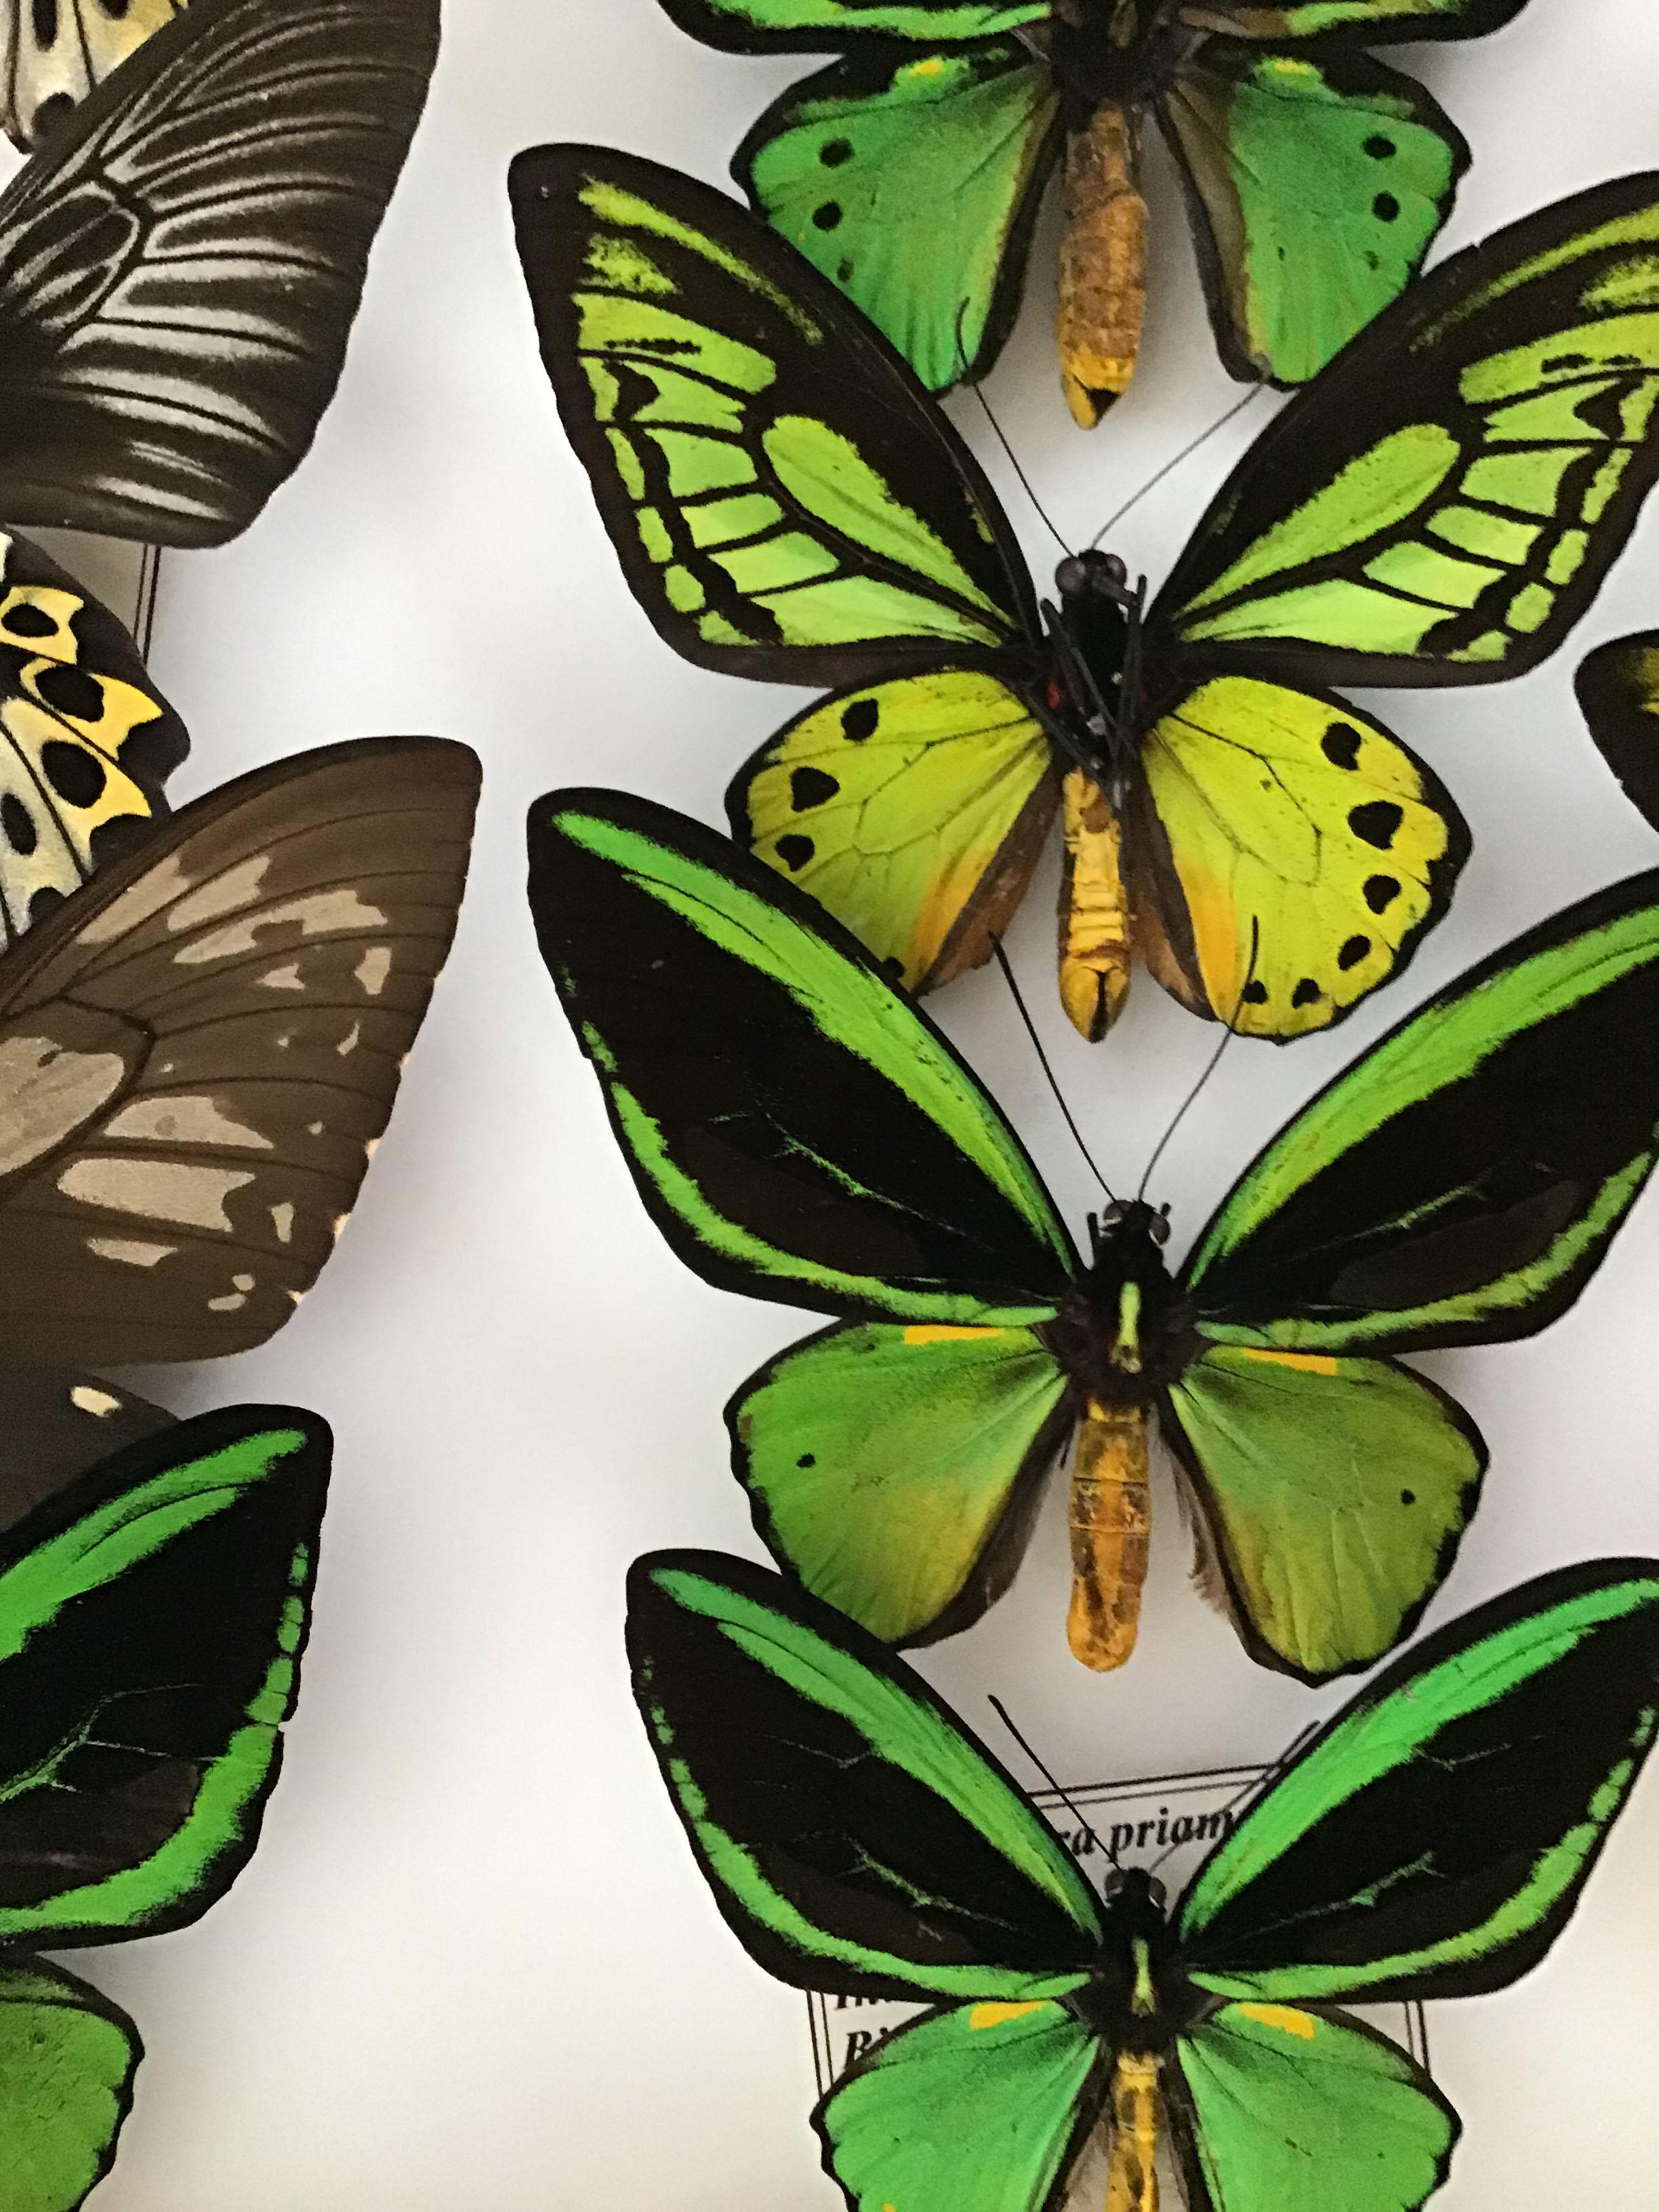 Wood Collection of Rare Birdwing Butterflies